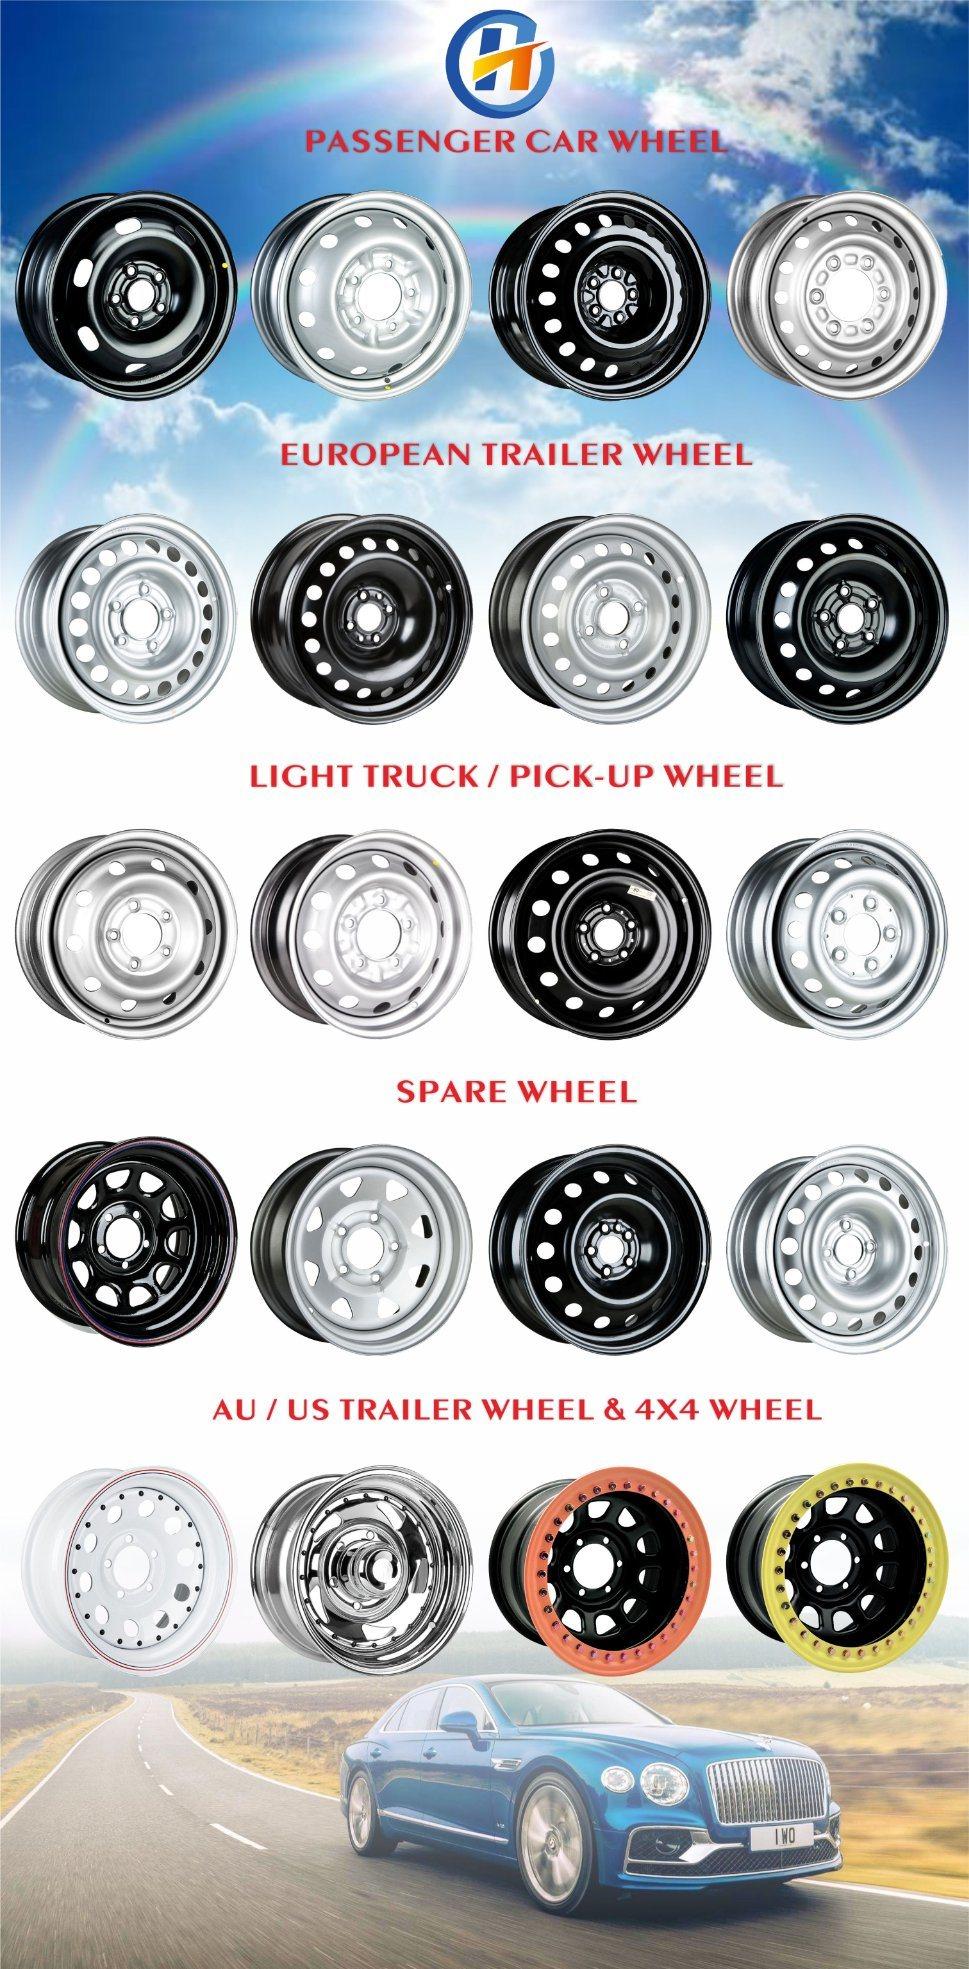 H&T Wheel 675403 16 Inch 16X6.5 PCD 5X108 Black Steel Wheel Rim for Passenger Car